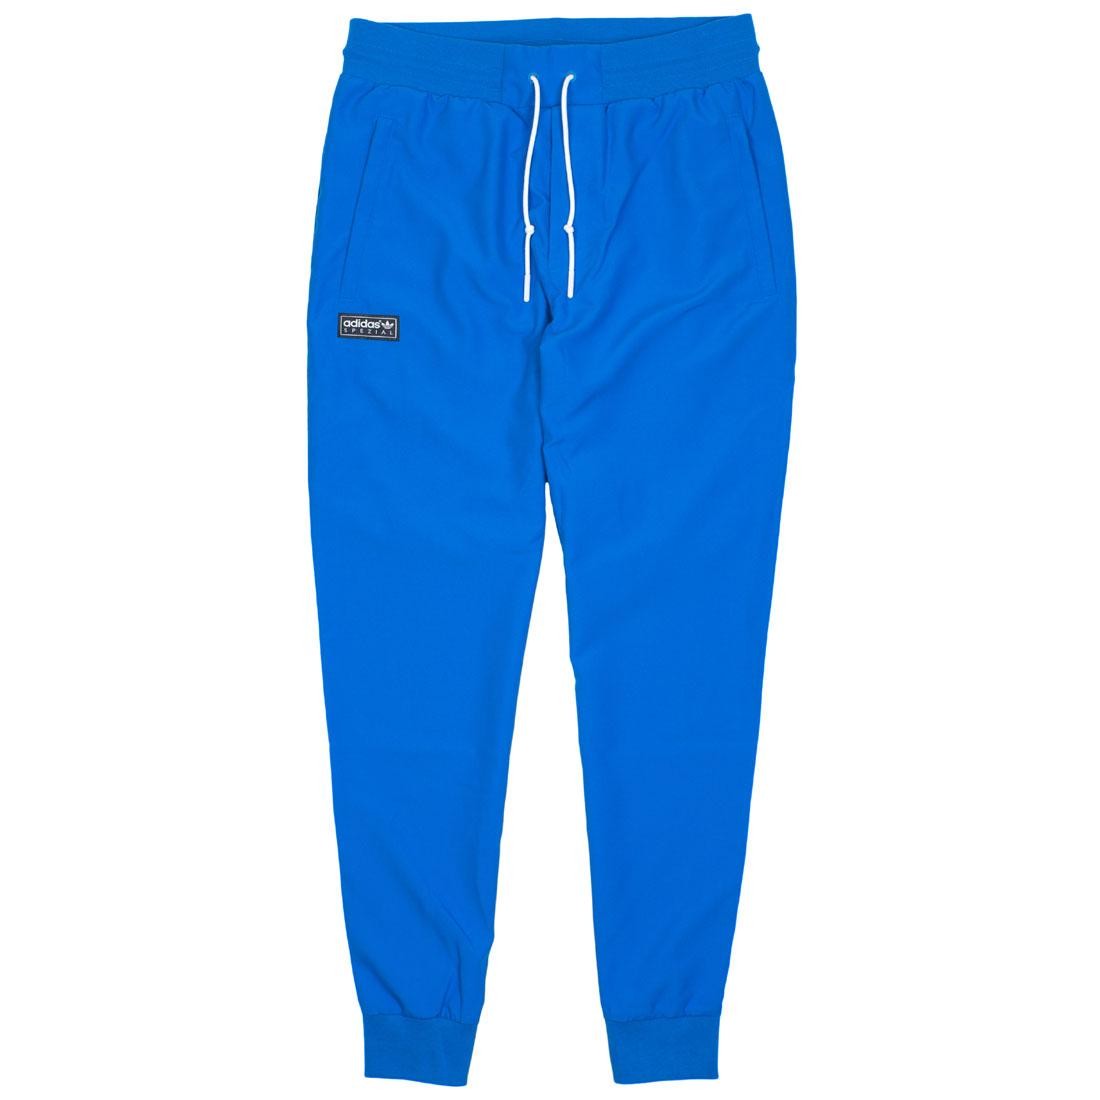 Adidas Men Cardle Track Pants (blue / bluebird)